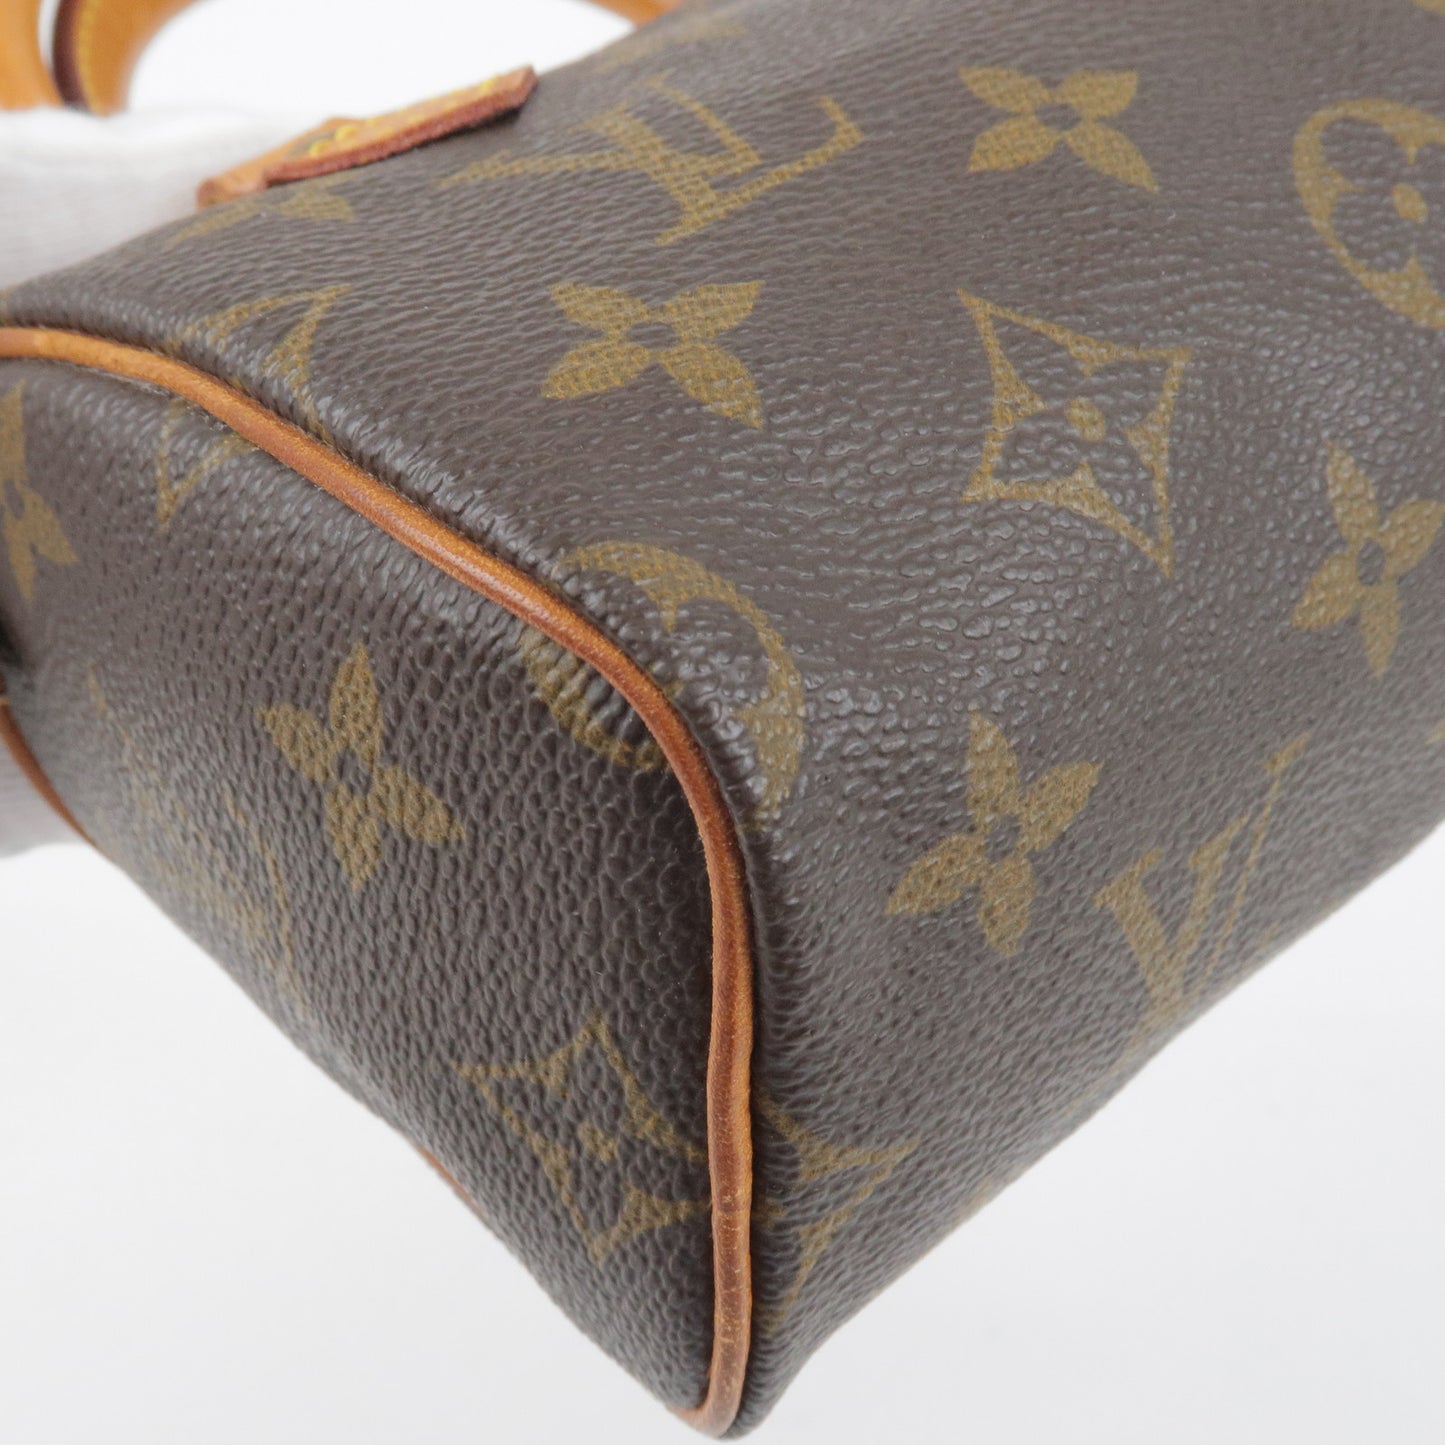 Louis Vuitton Monogram Mini Speedy Hand Bag M41534